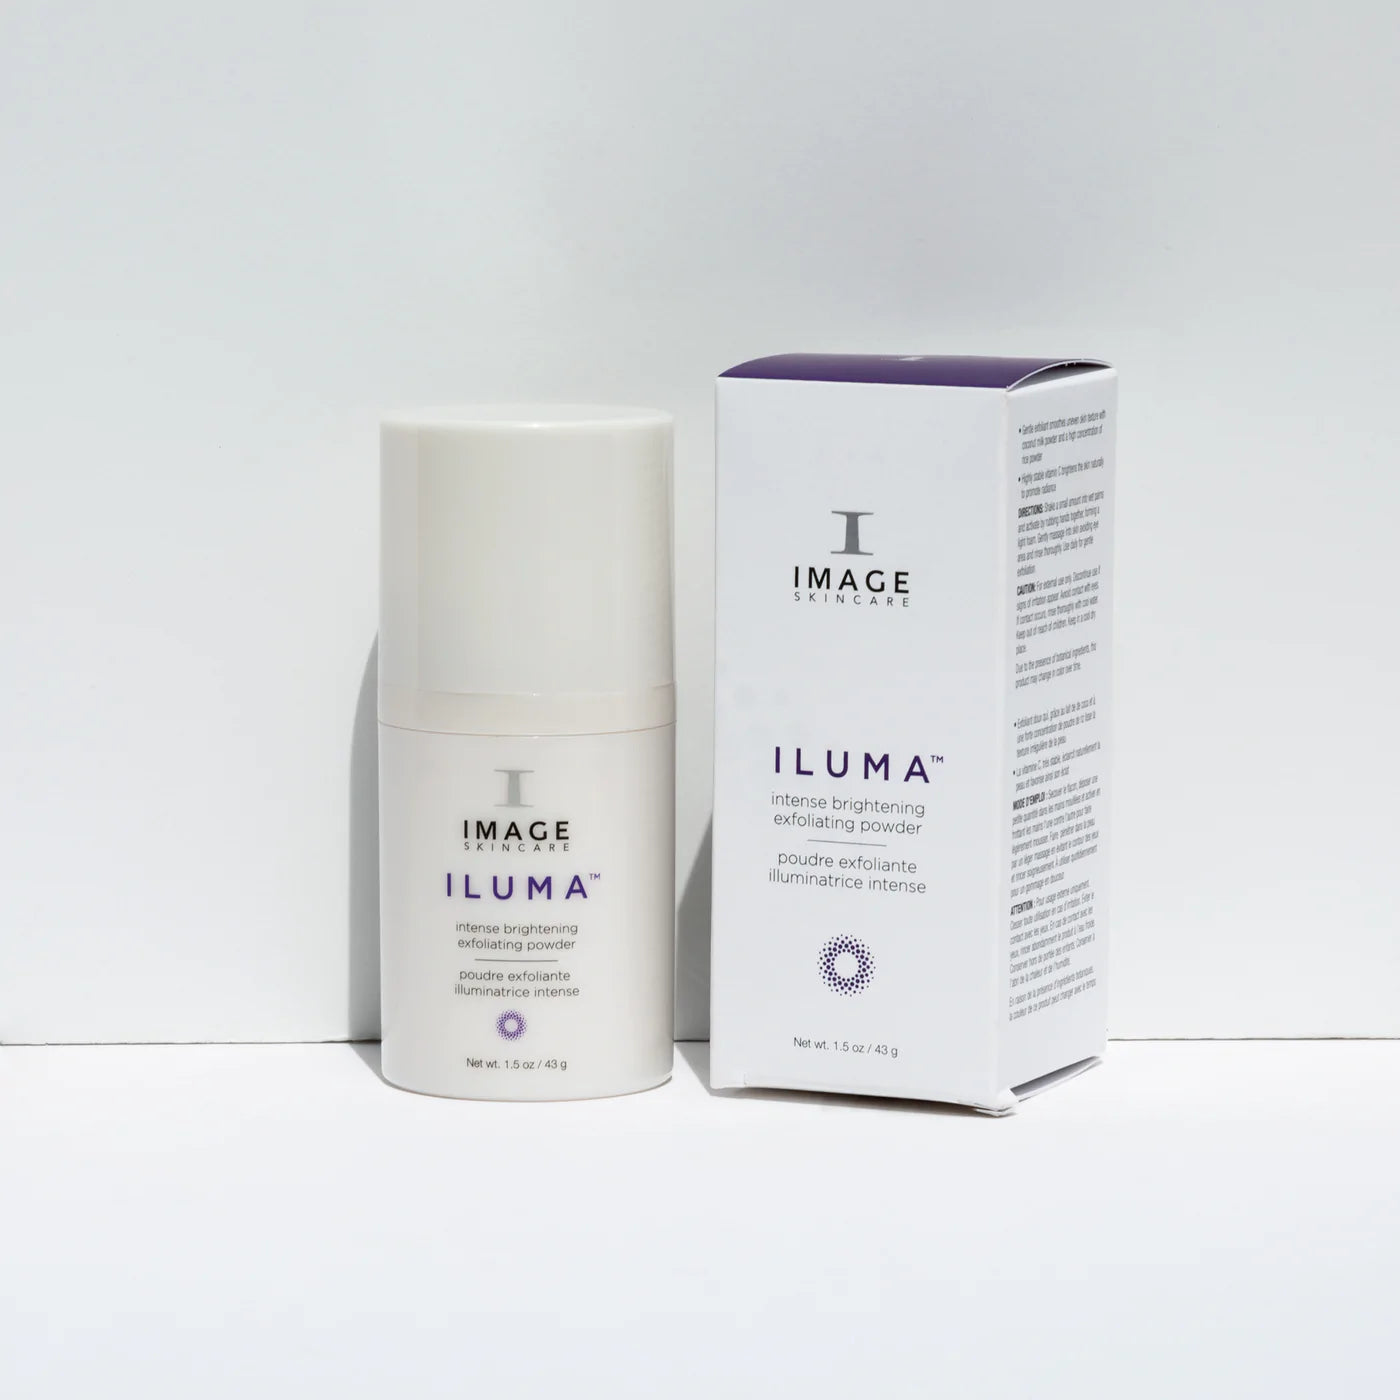 IMAGE Iluma Intense Brightening Exfoliating Powder (1.5 oz)